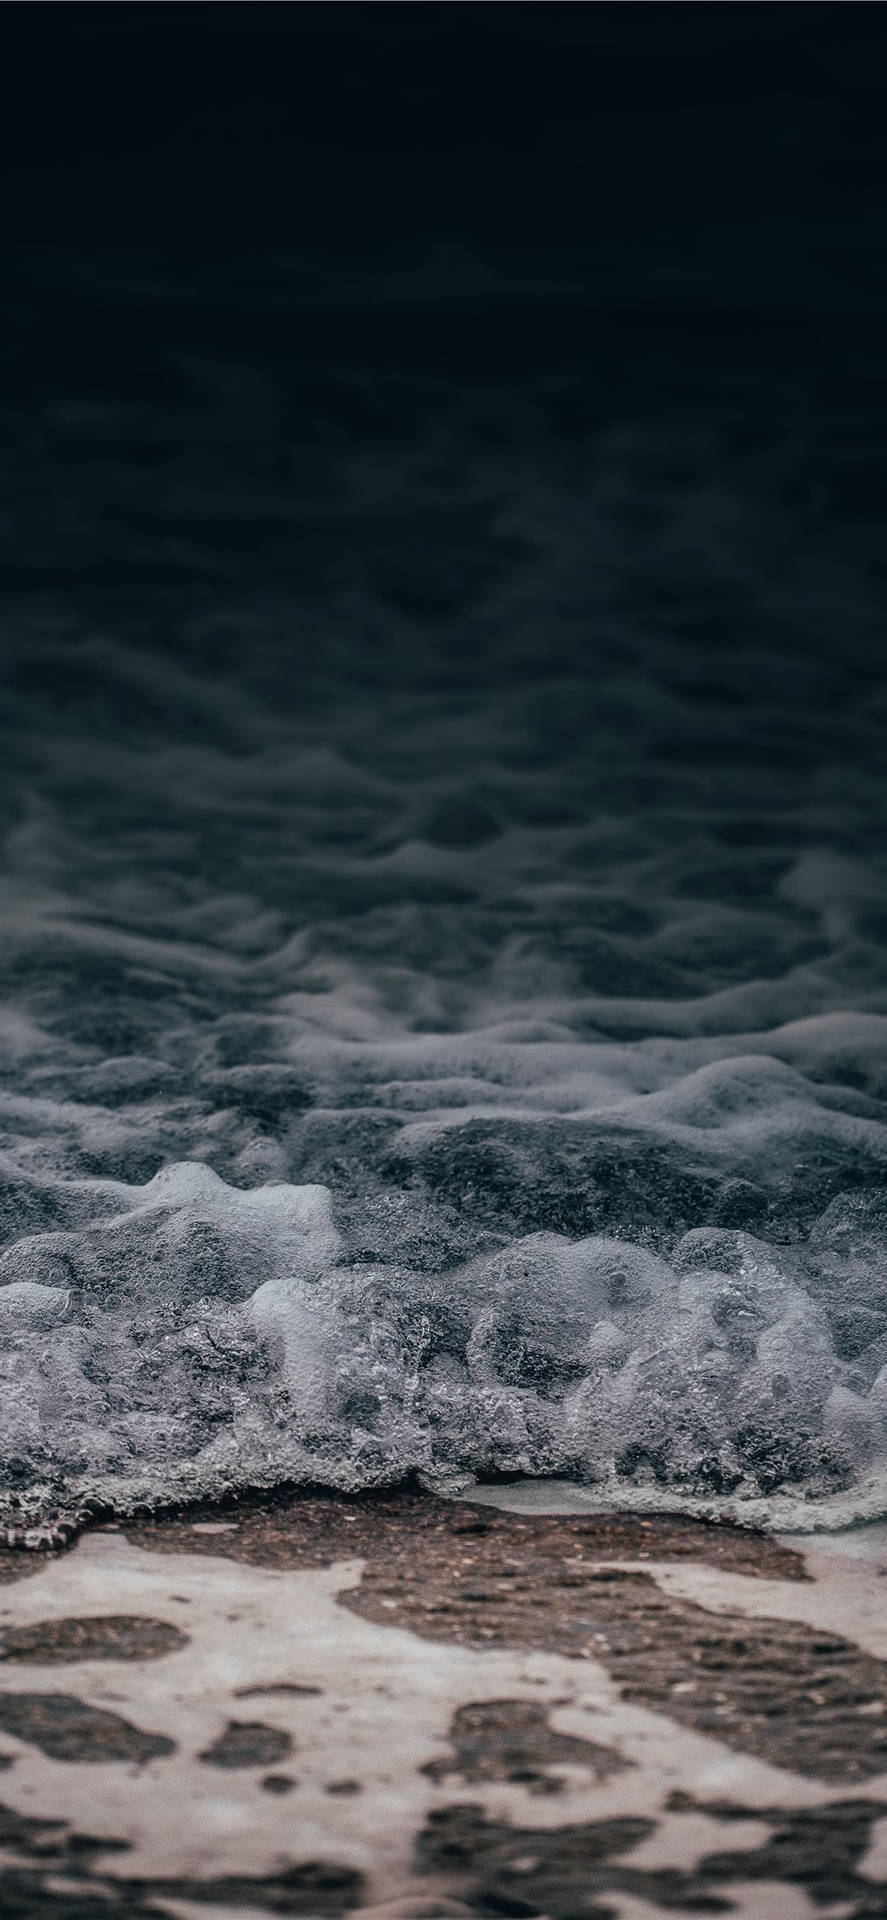 Close-Up Foamy Beach Wave iPhone Wallpaper